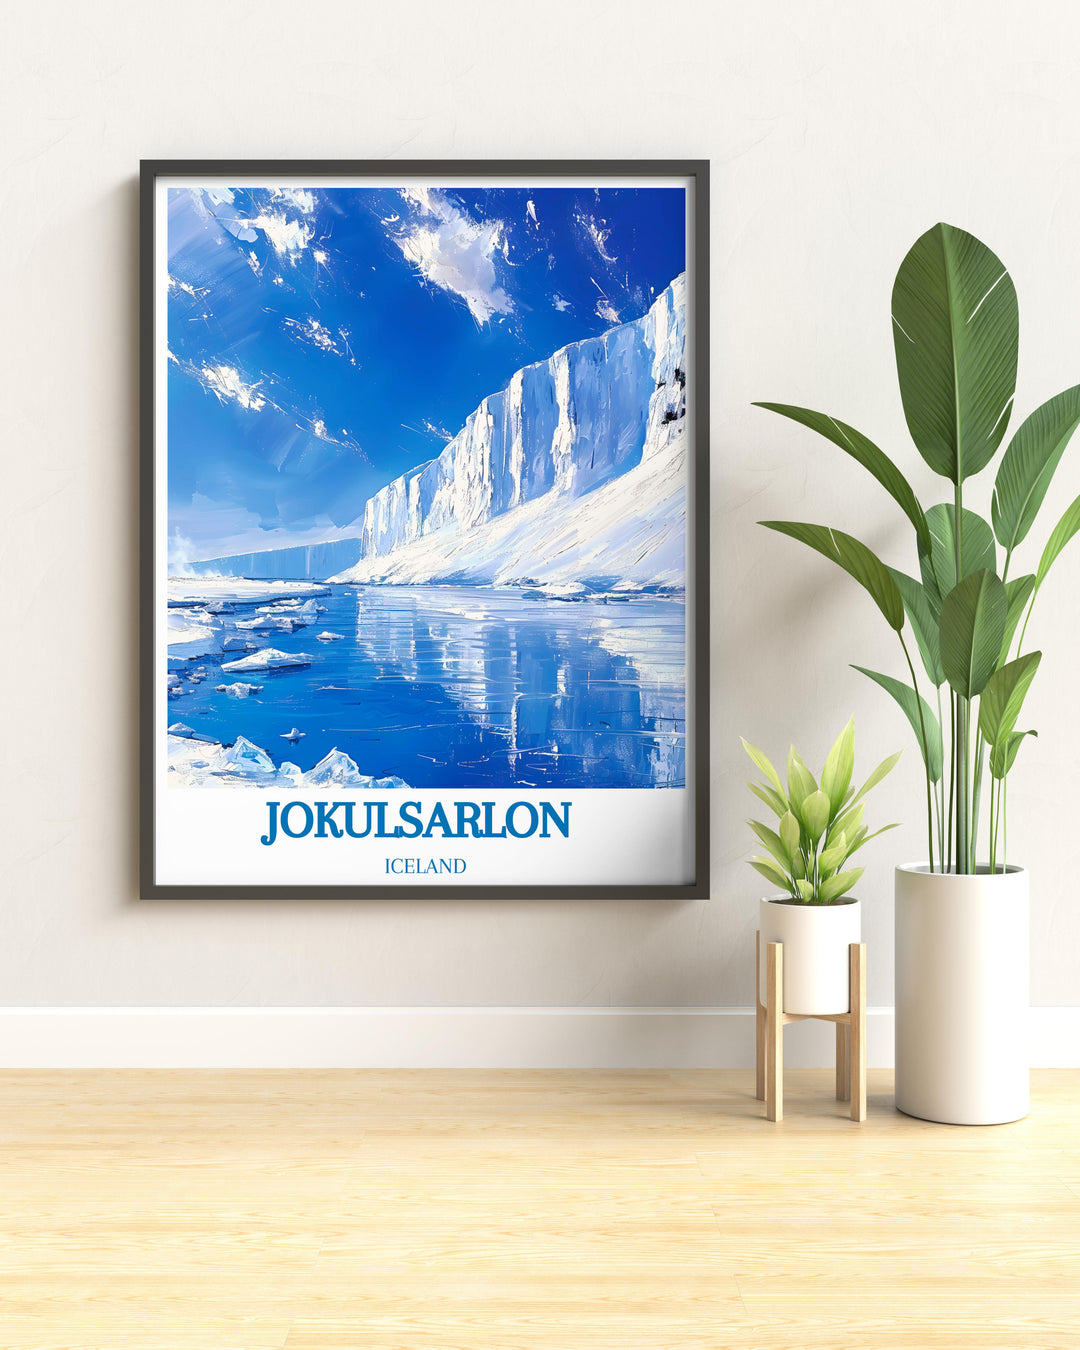 Custom Iceland print featuring the vibrant Aurora Borealis over Jokulsarlon, great for enhancing bedroom or living room decor